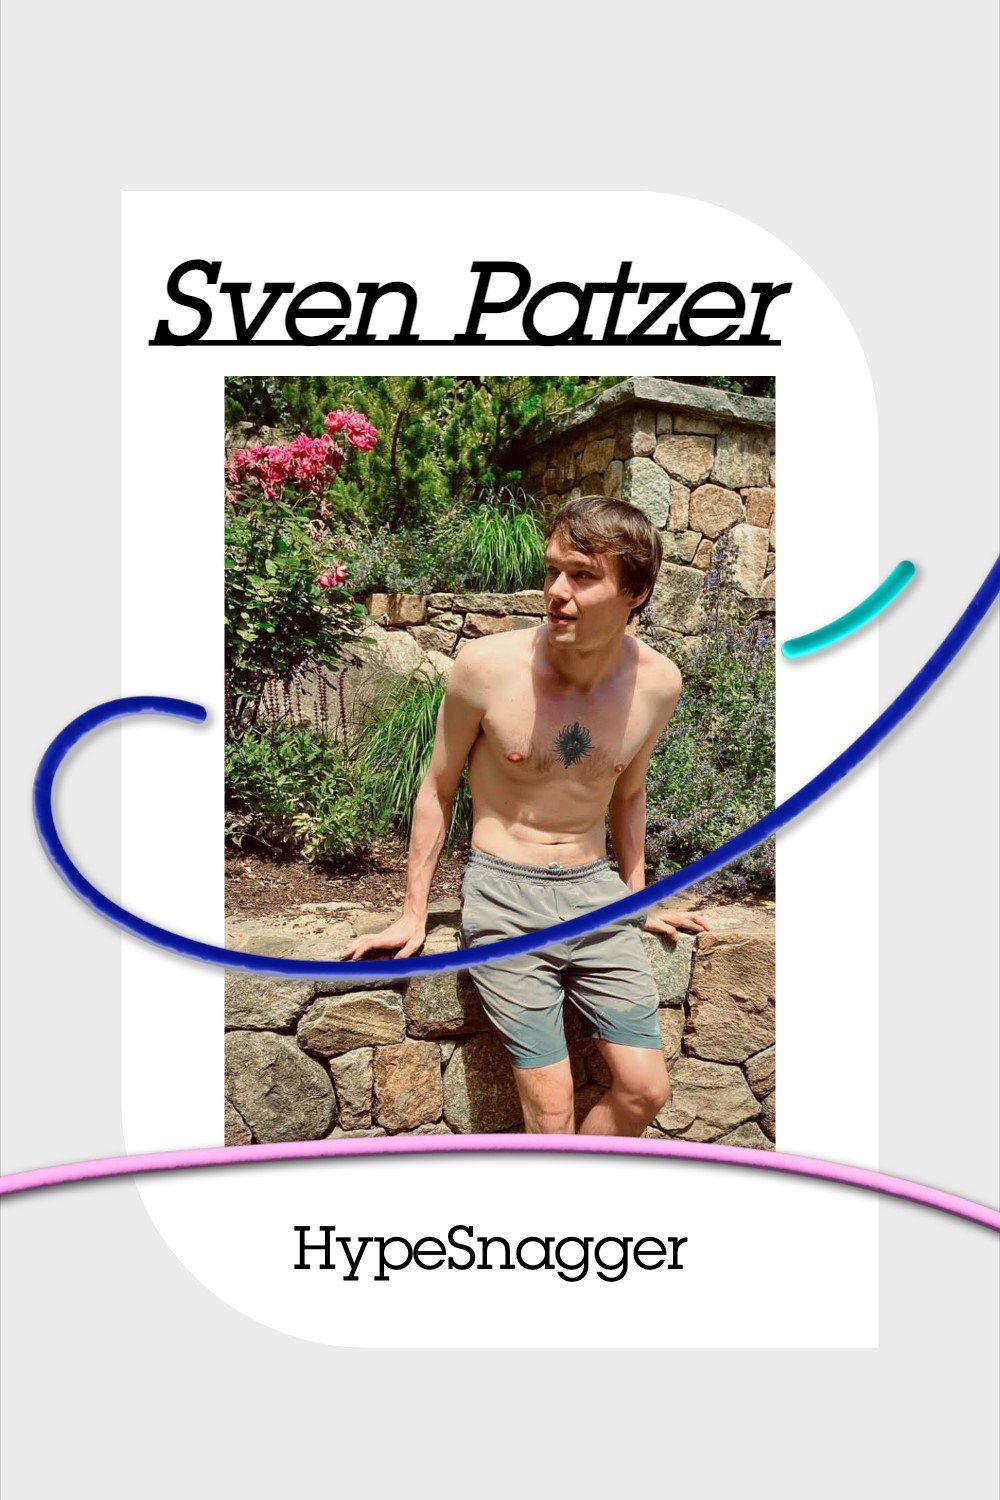 Internet Sensation Sven Patzer Officially Becomes Famous